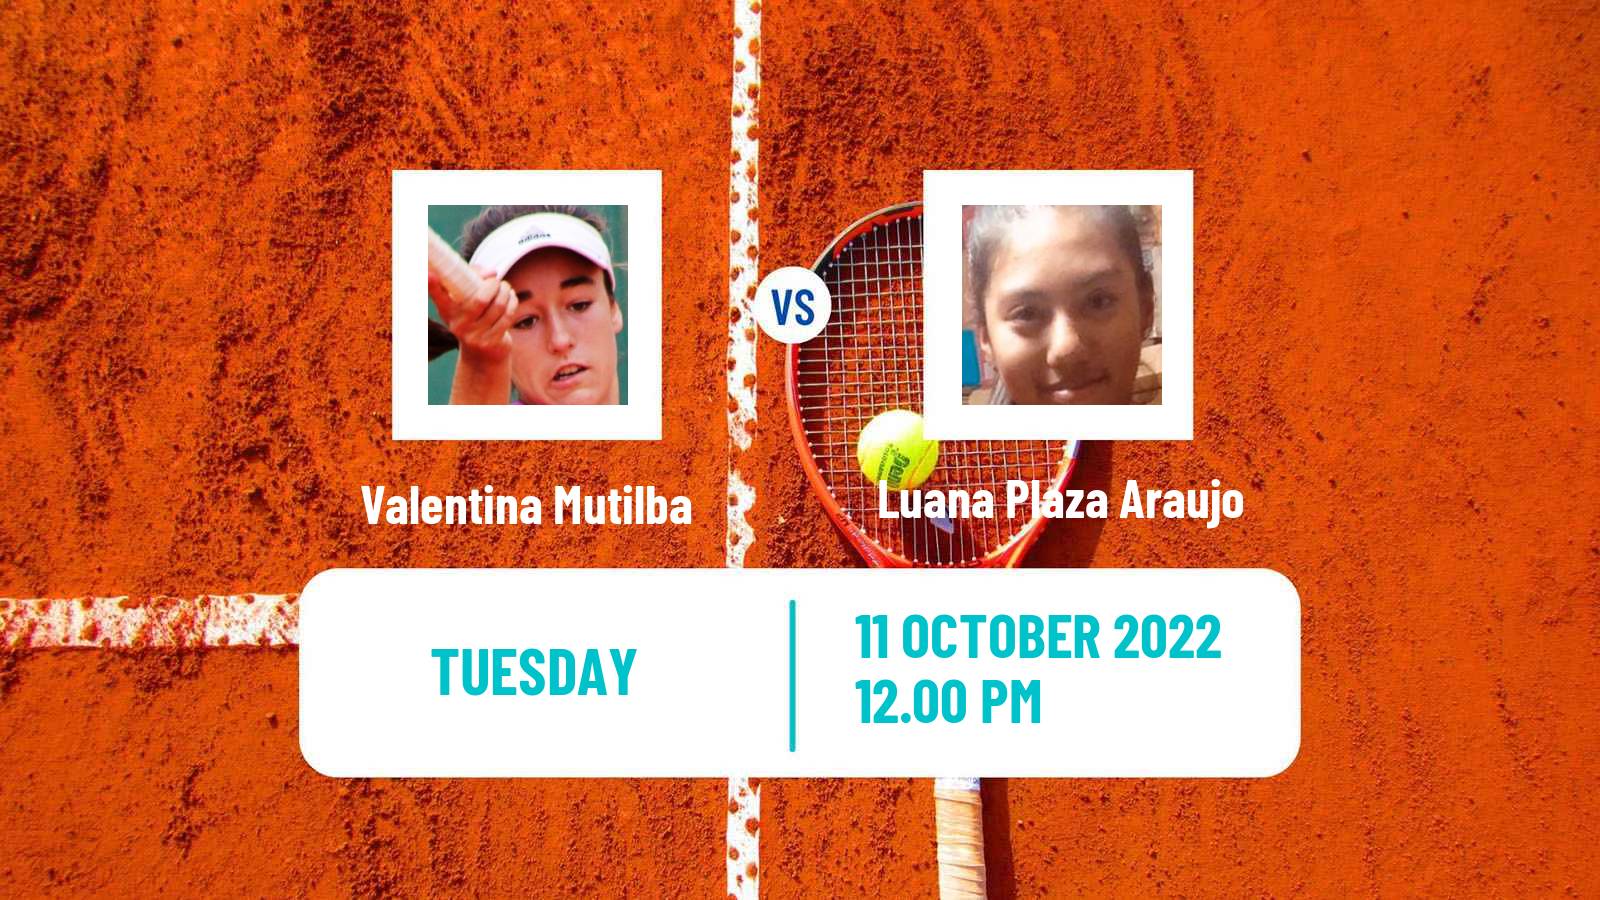 Tennis ITF Tournaments Valentina Mutilba - Luana Plaza Araujo